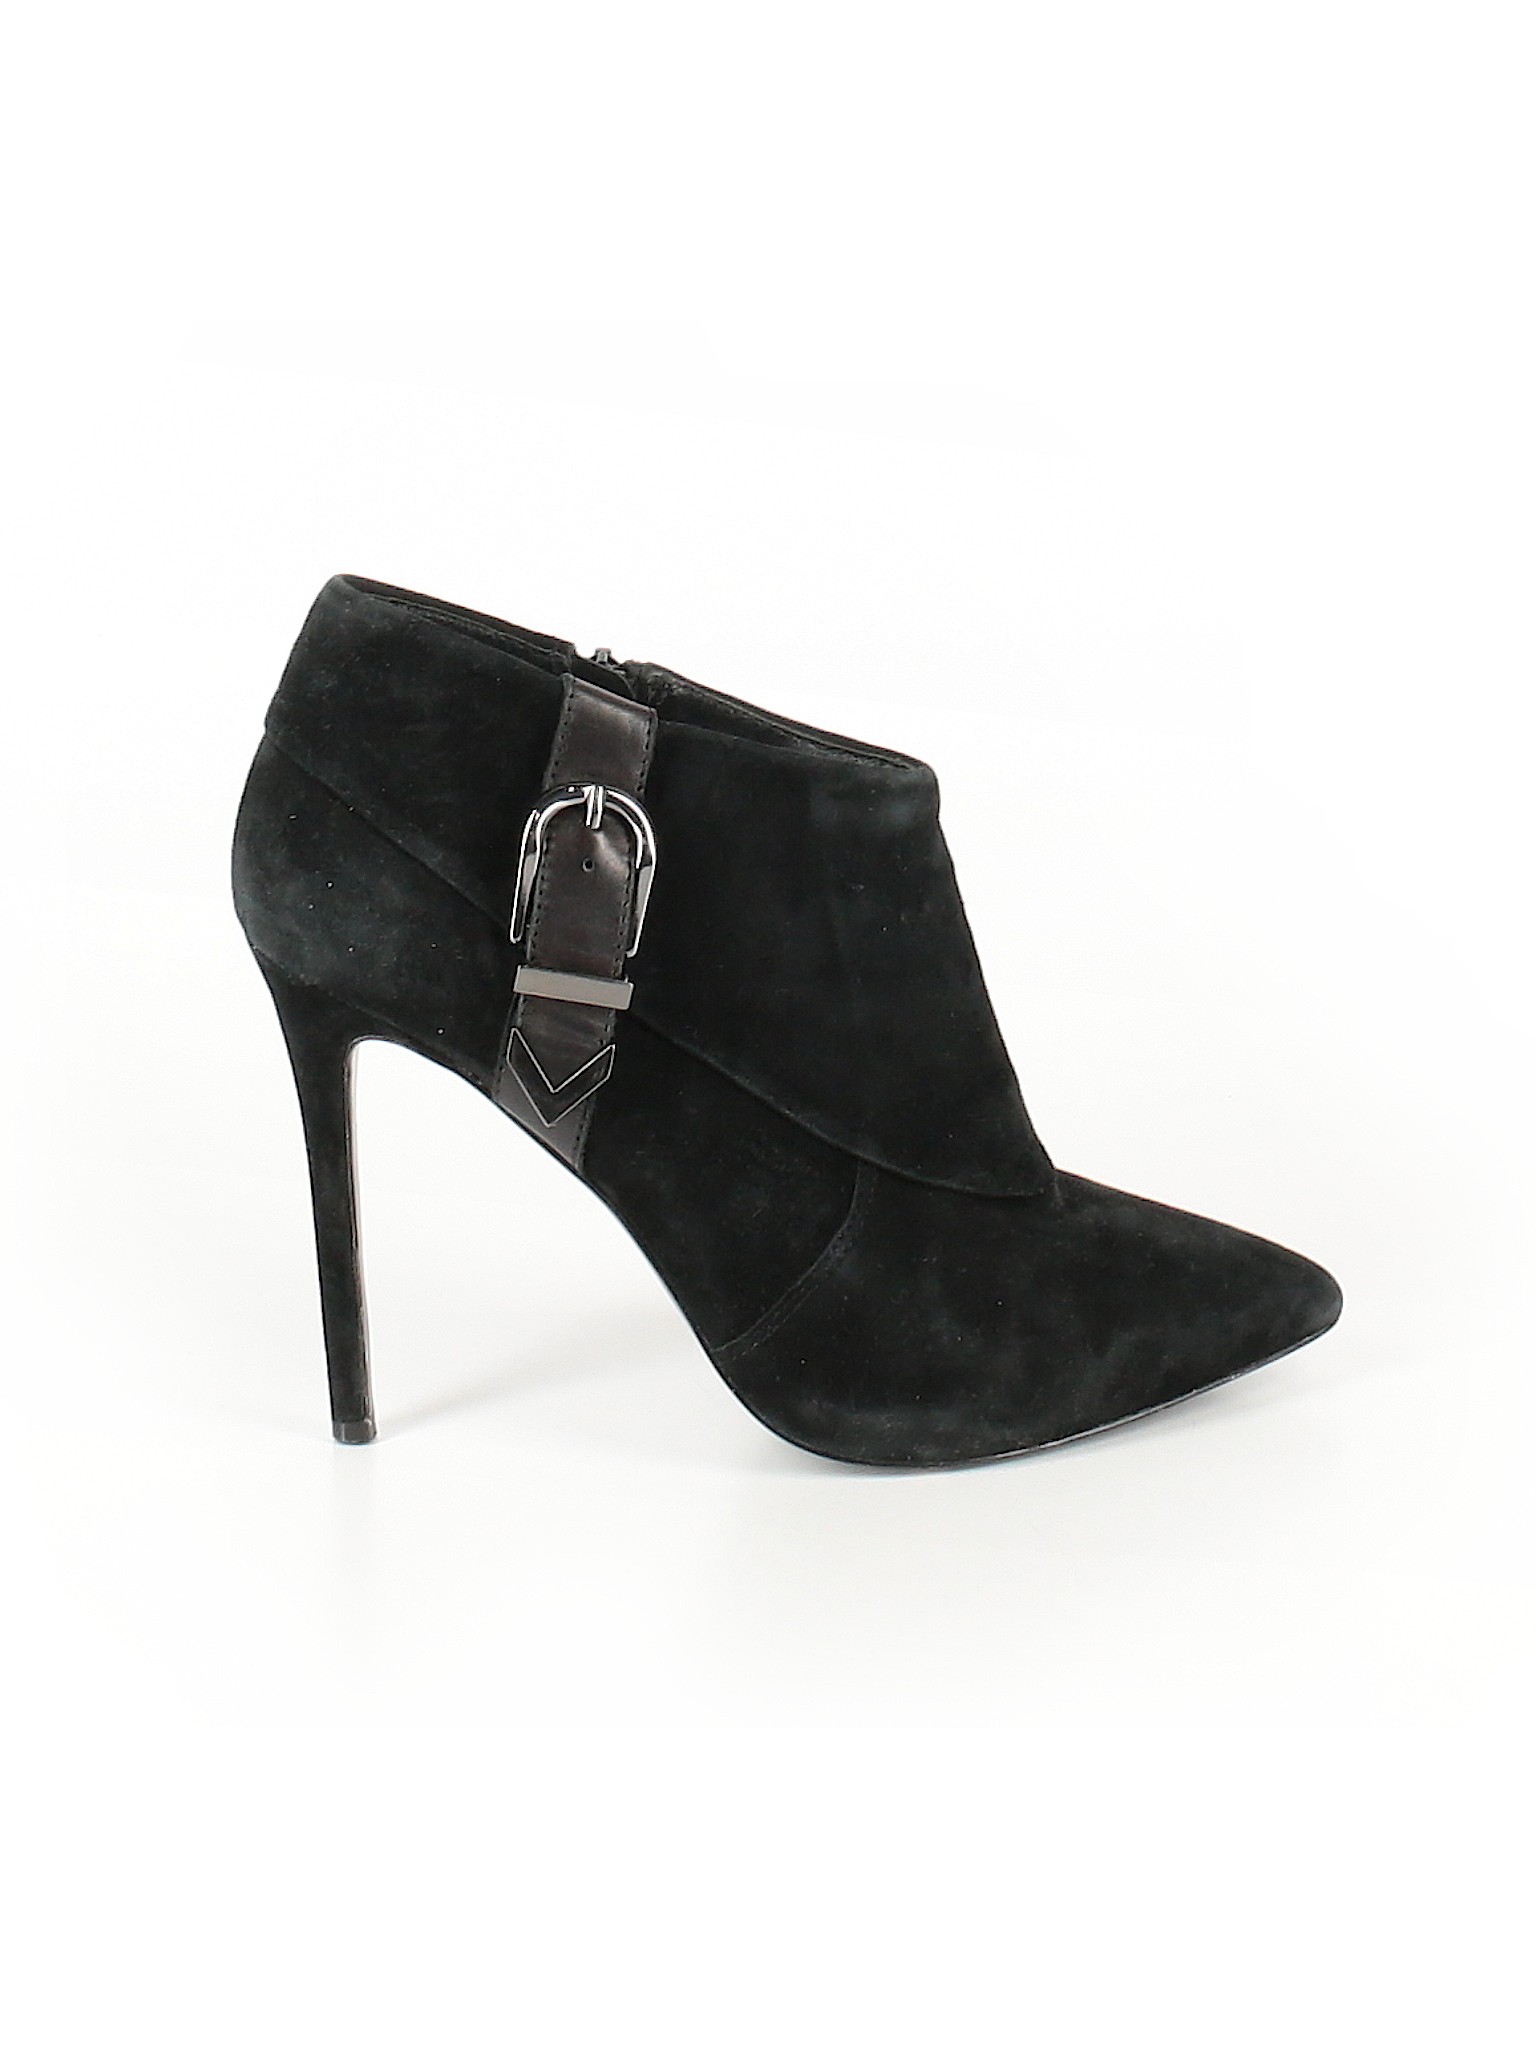 Charles David Women Black Ankle Boots US 9 | eBay